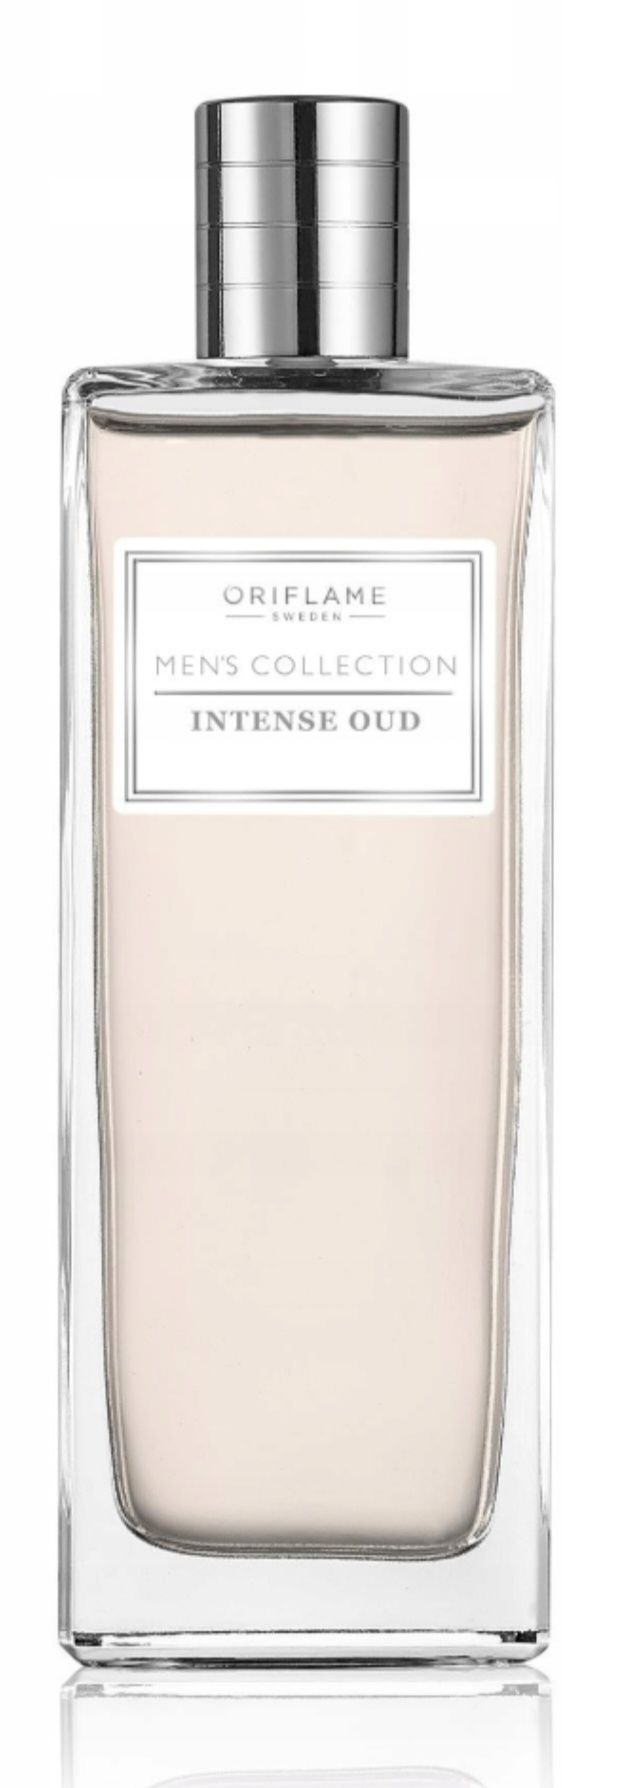 Oriflame Men's Collection Intense Oud 75 ml